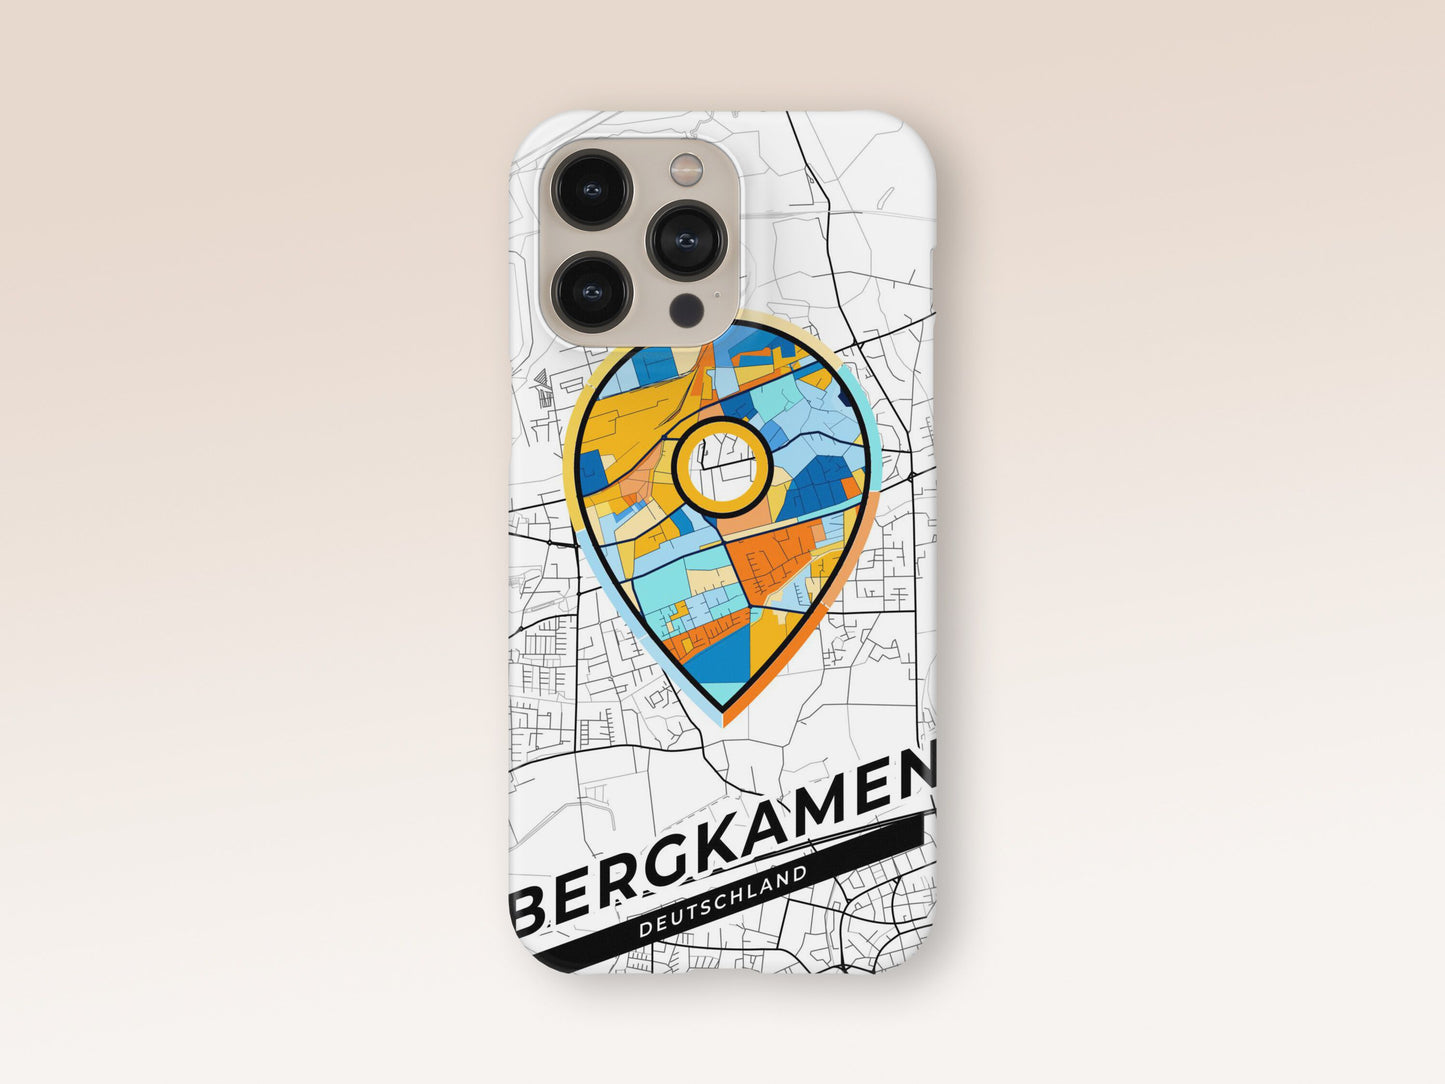 Bergkamen Deutschland slim phone case with colorful icon. Birthday, wedding or housewarming gift. Couple match cases. 1